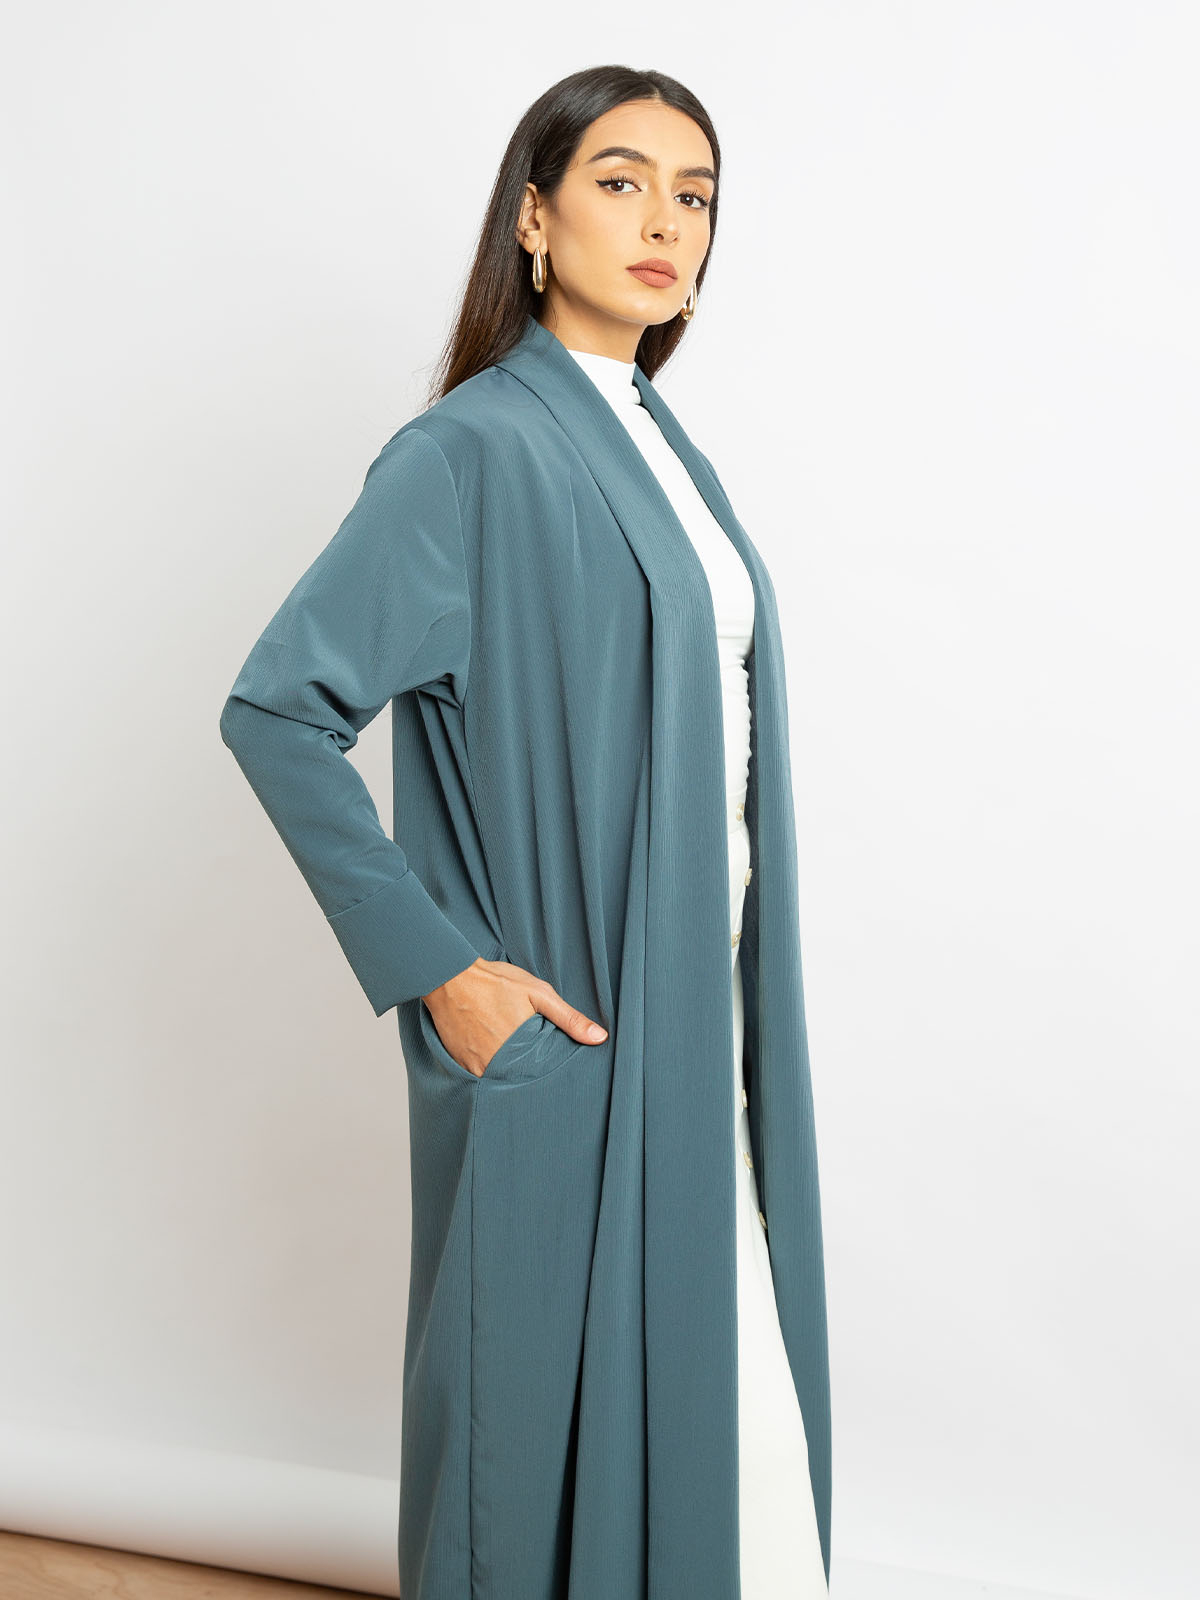 Kaafmeem women clothing regular fit green color long open abaya in fancy yoryu fabric with hidden pockets